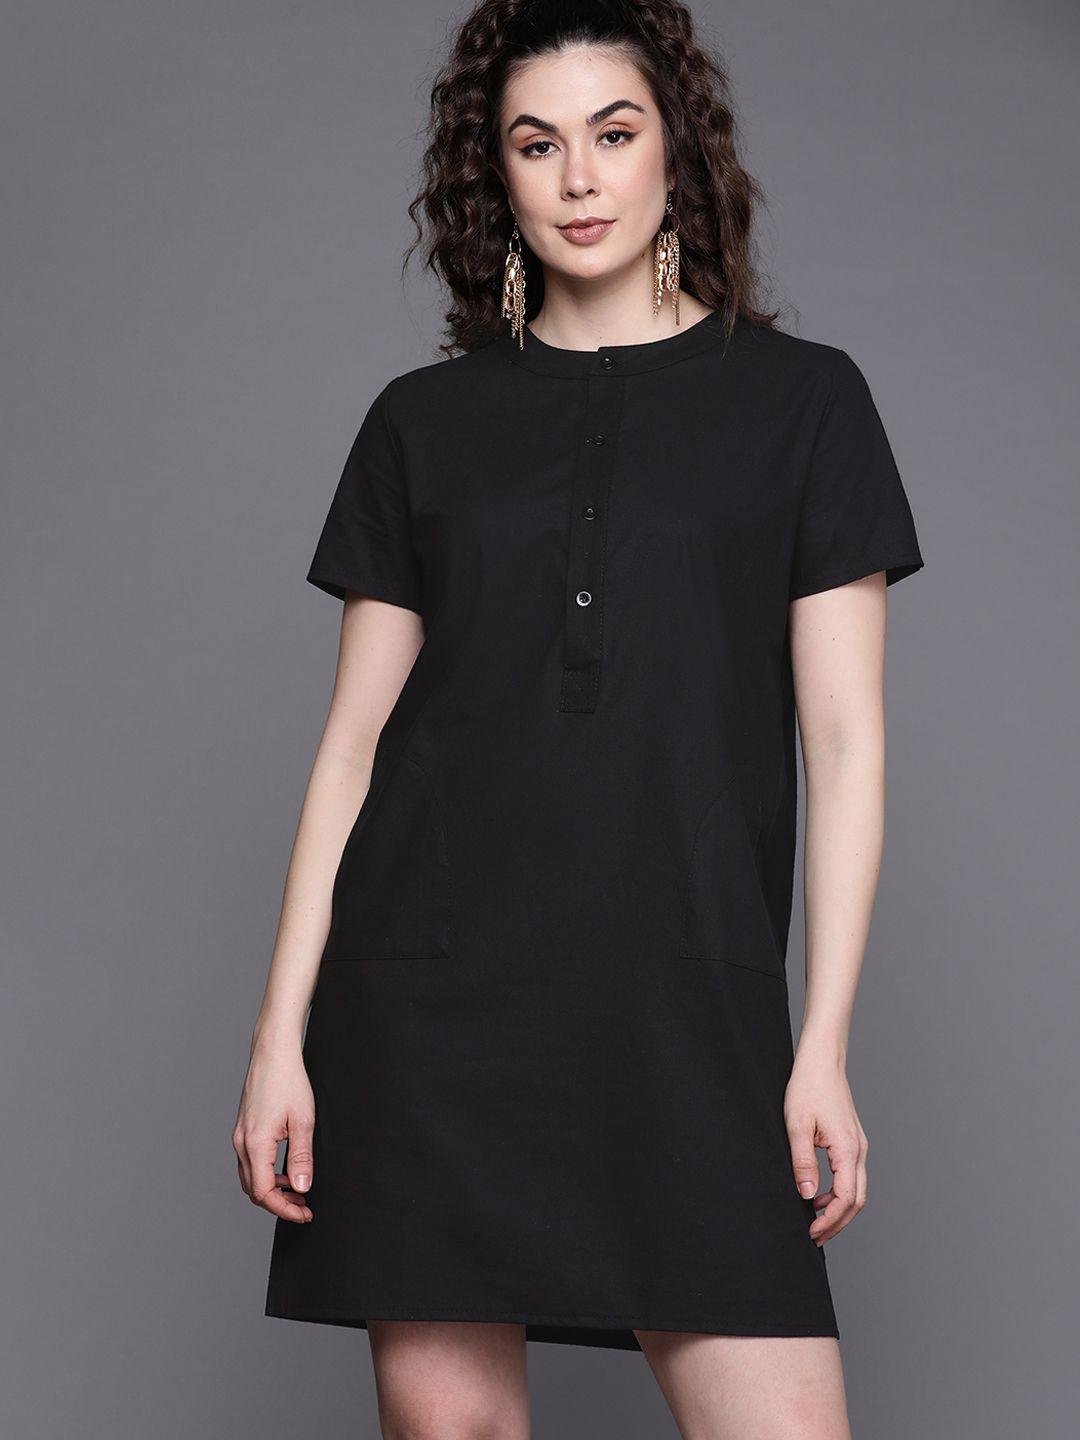 jc mode black solid t-shirt dress